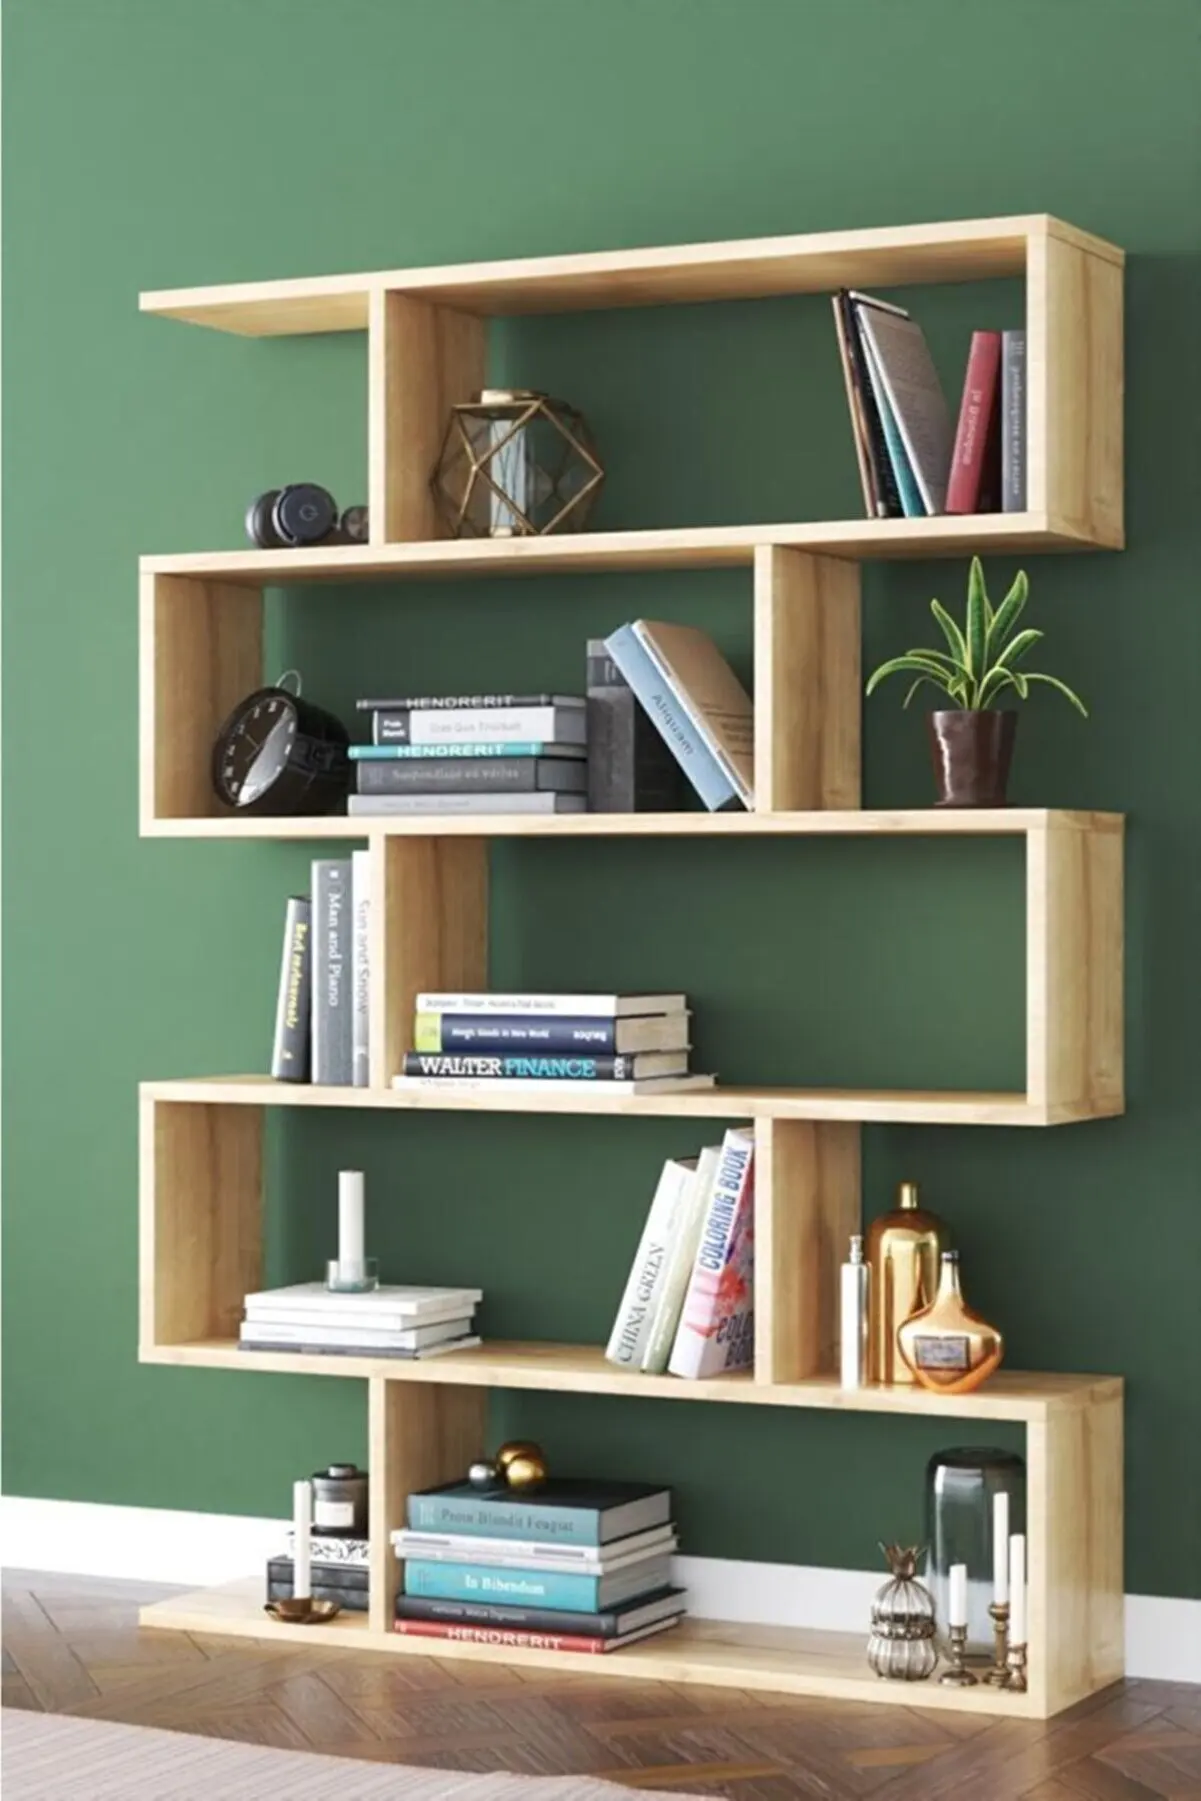 

Oak High quality chipboard BookShelf Bookcase Shelf Shelves Bookshelves Furniture Office Living Room Book Roof Interior Design